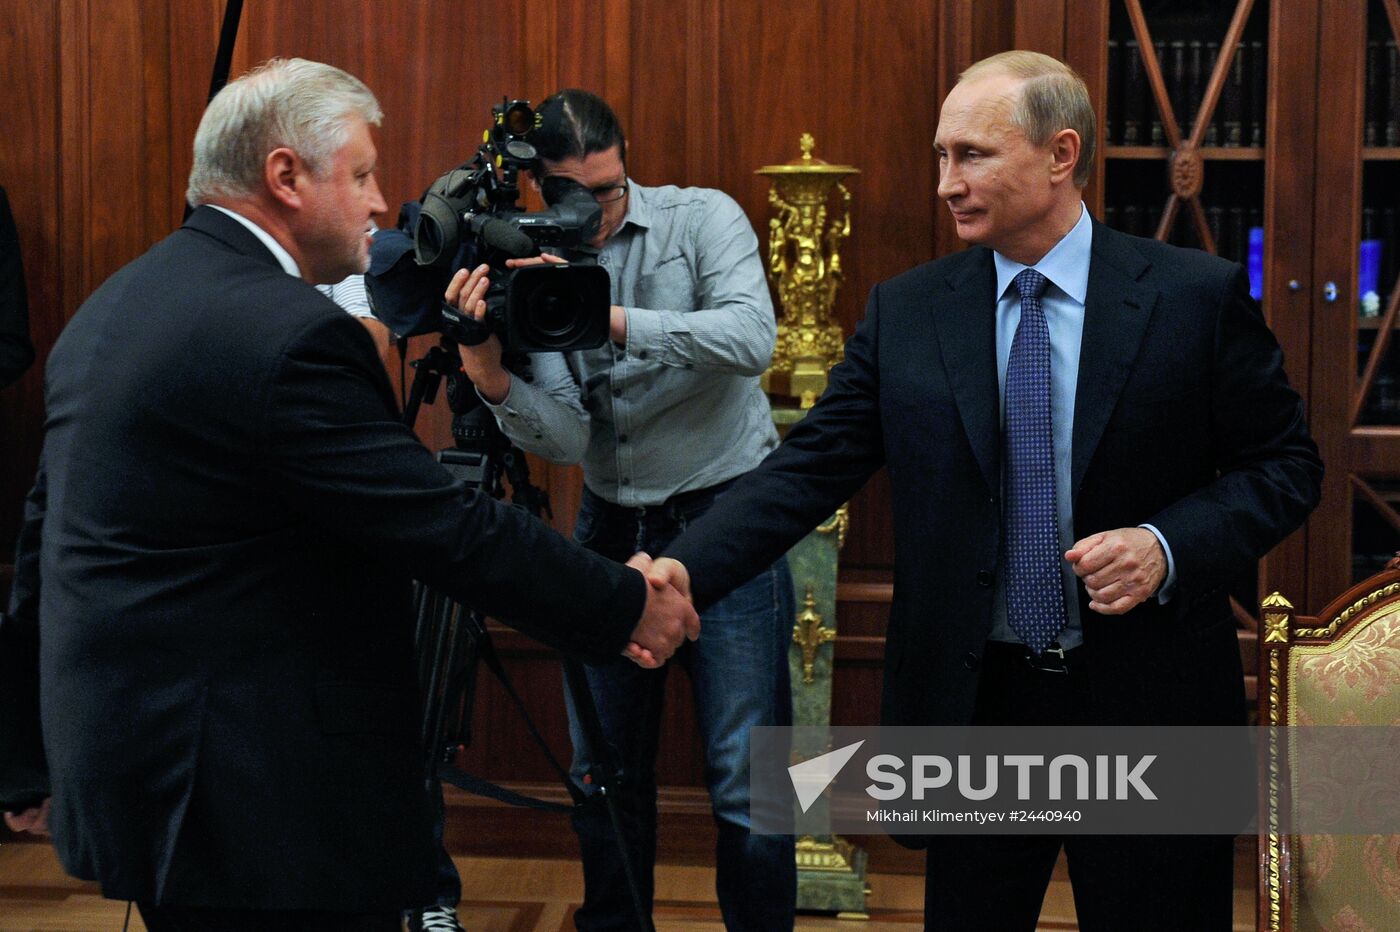 Vladimir Putin meets with Sergey Mironov